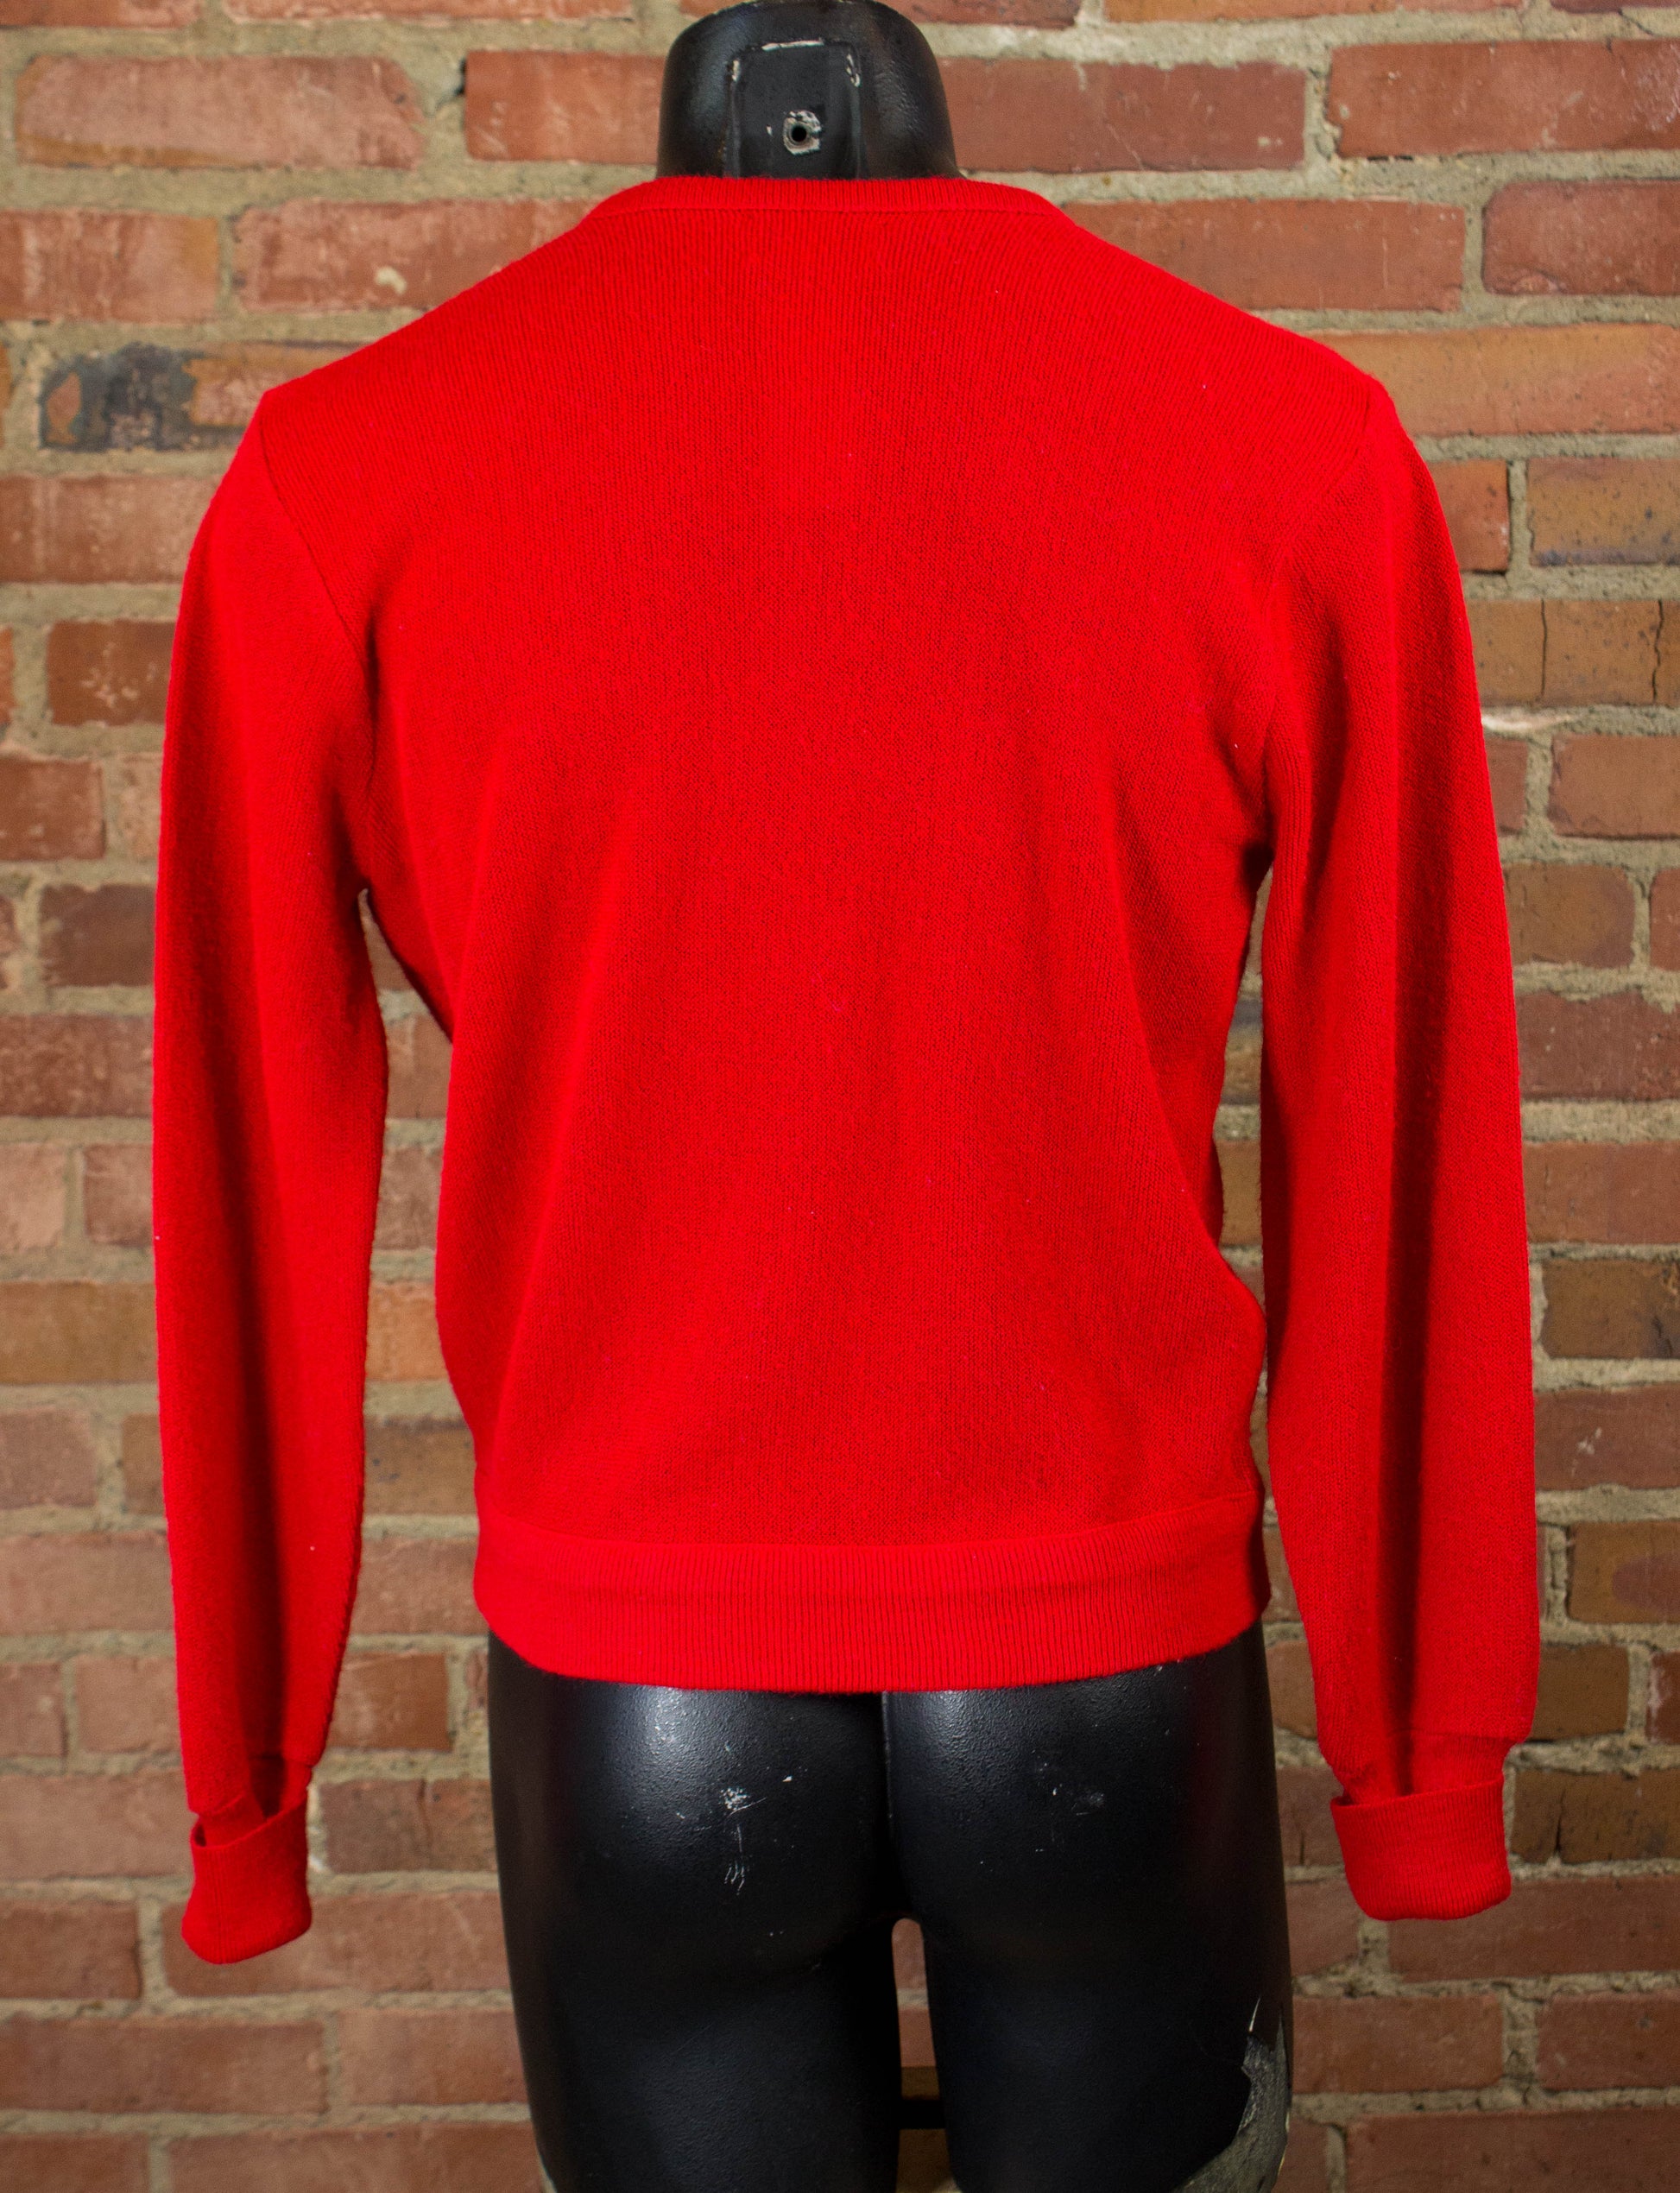 Vintage 70s Izod Lacoste Acrylic V-Neck Red Sweater Unisex Small-Medium